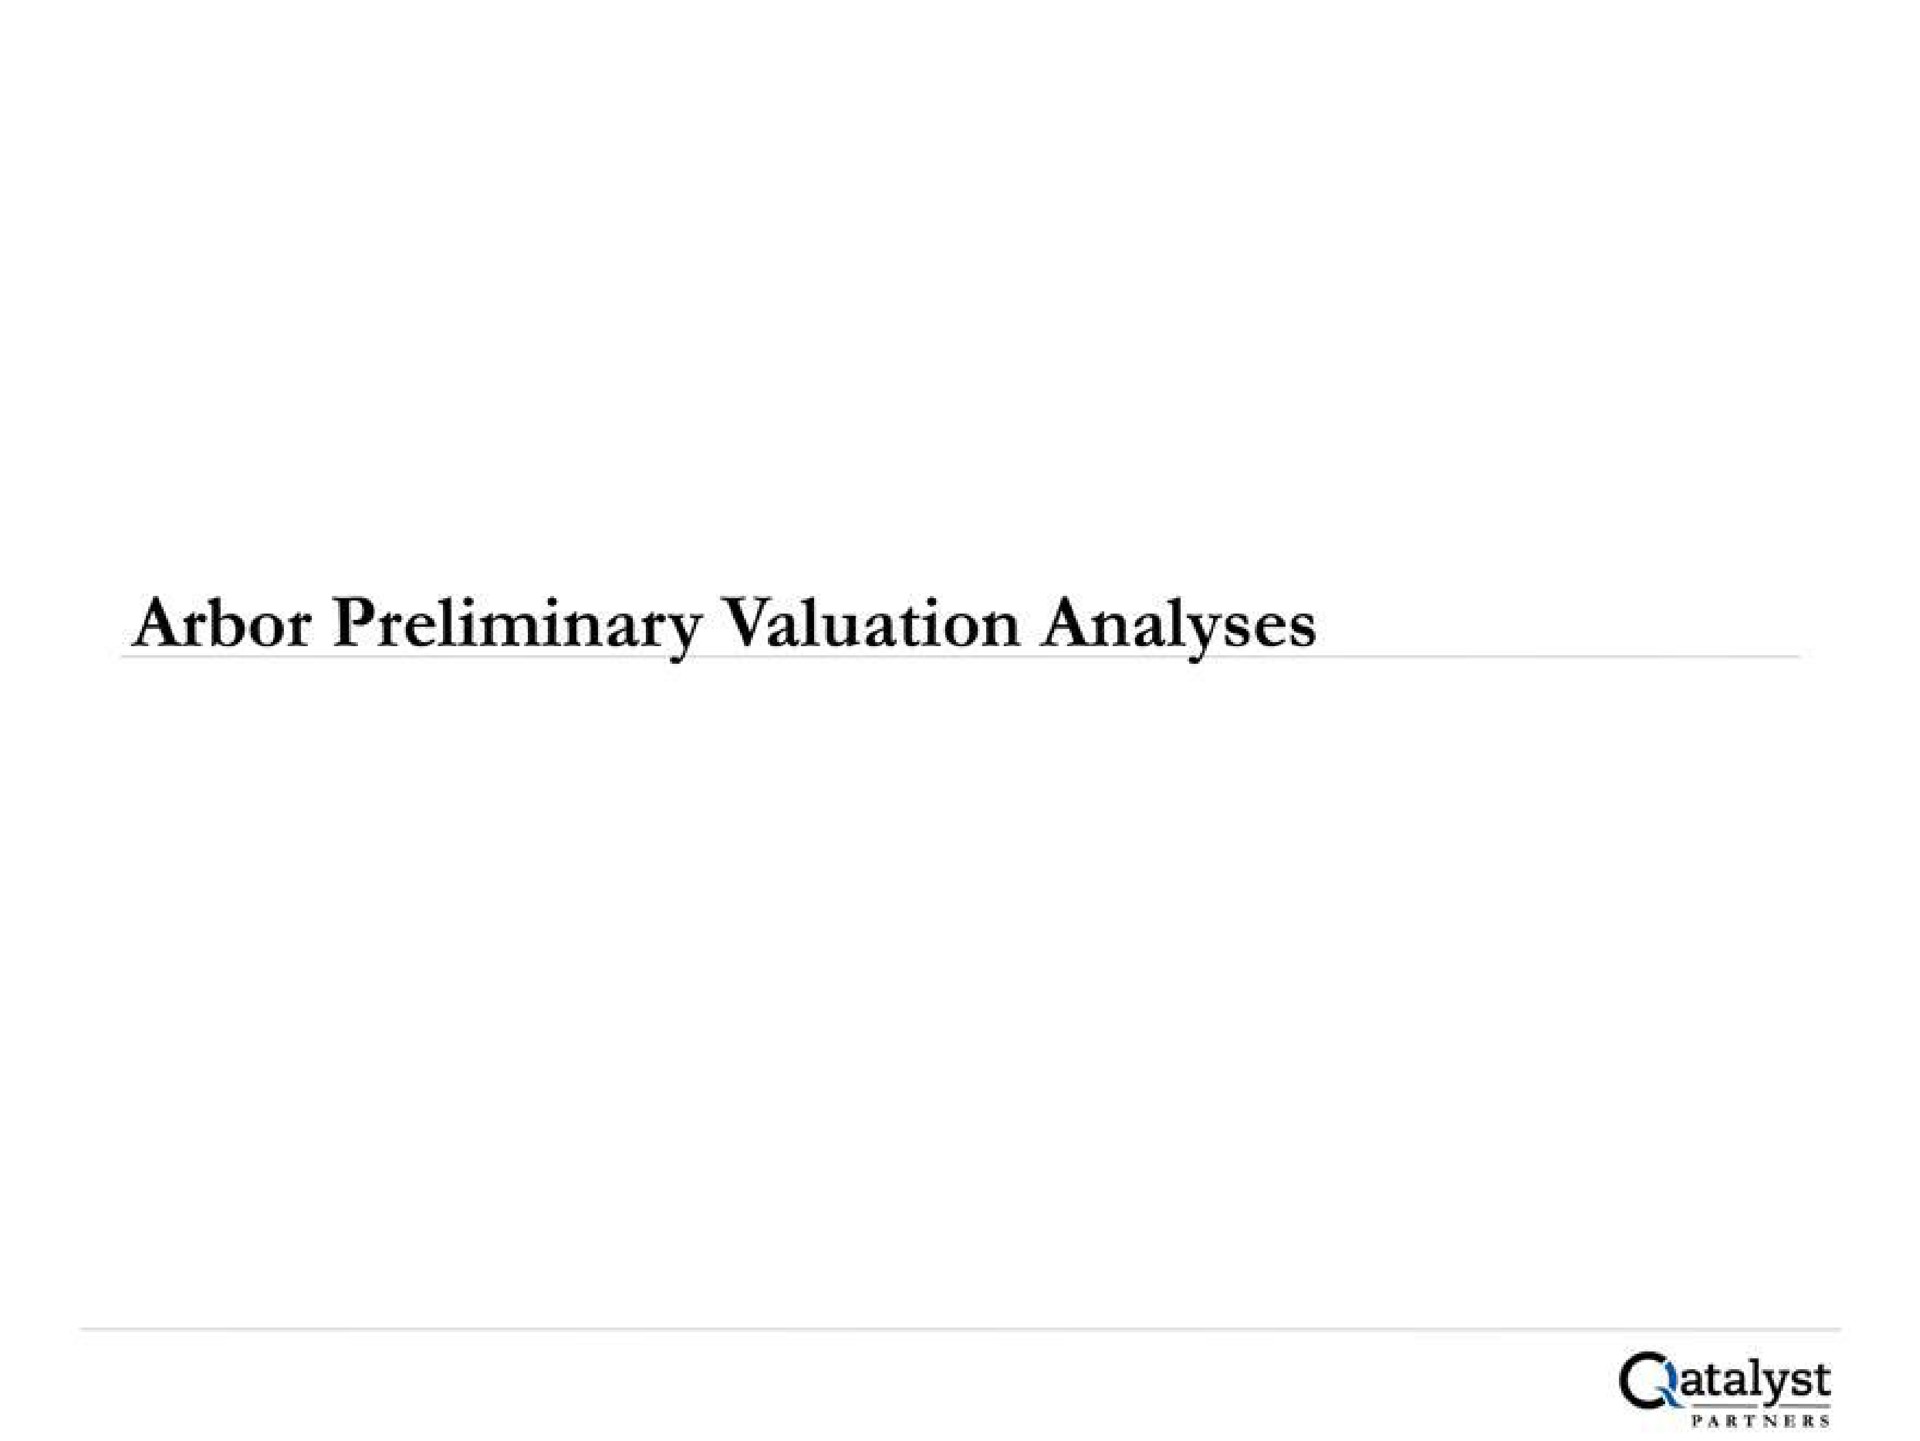 arbor preliminary valuation analyses catalyst | Qatalyst Partners